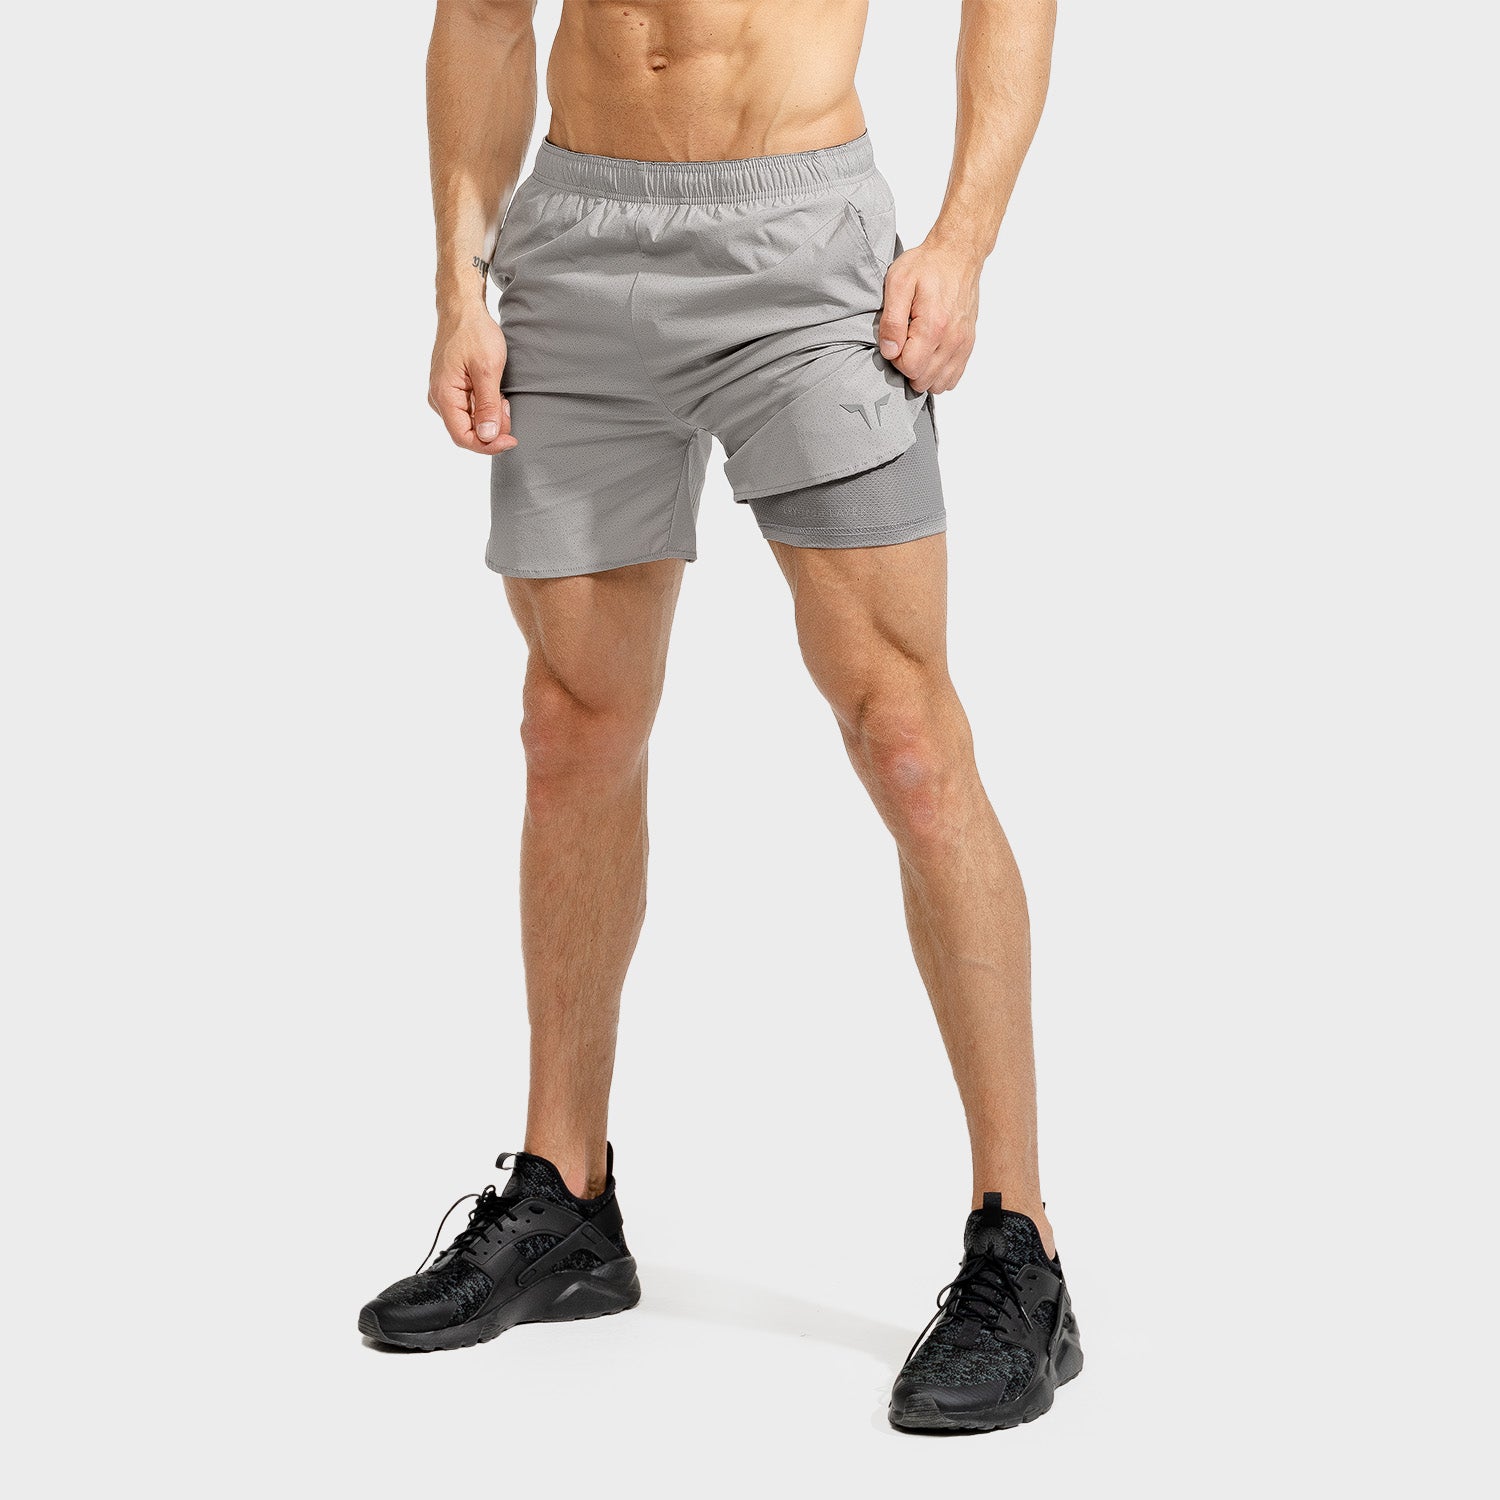 AE, LAB360° 2-in-1 Legging Shorts - Black, Gym Shorts Men